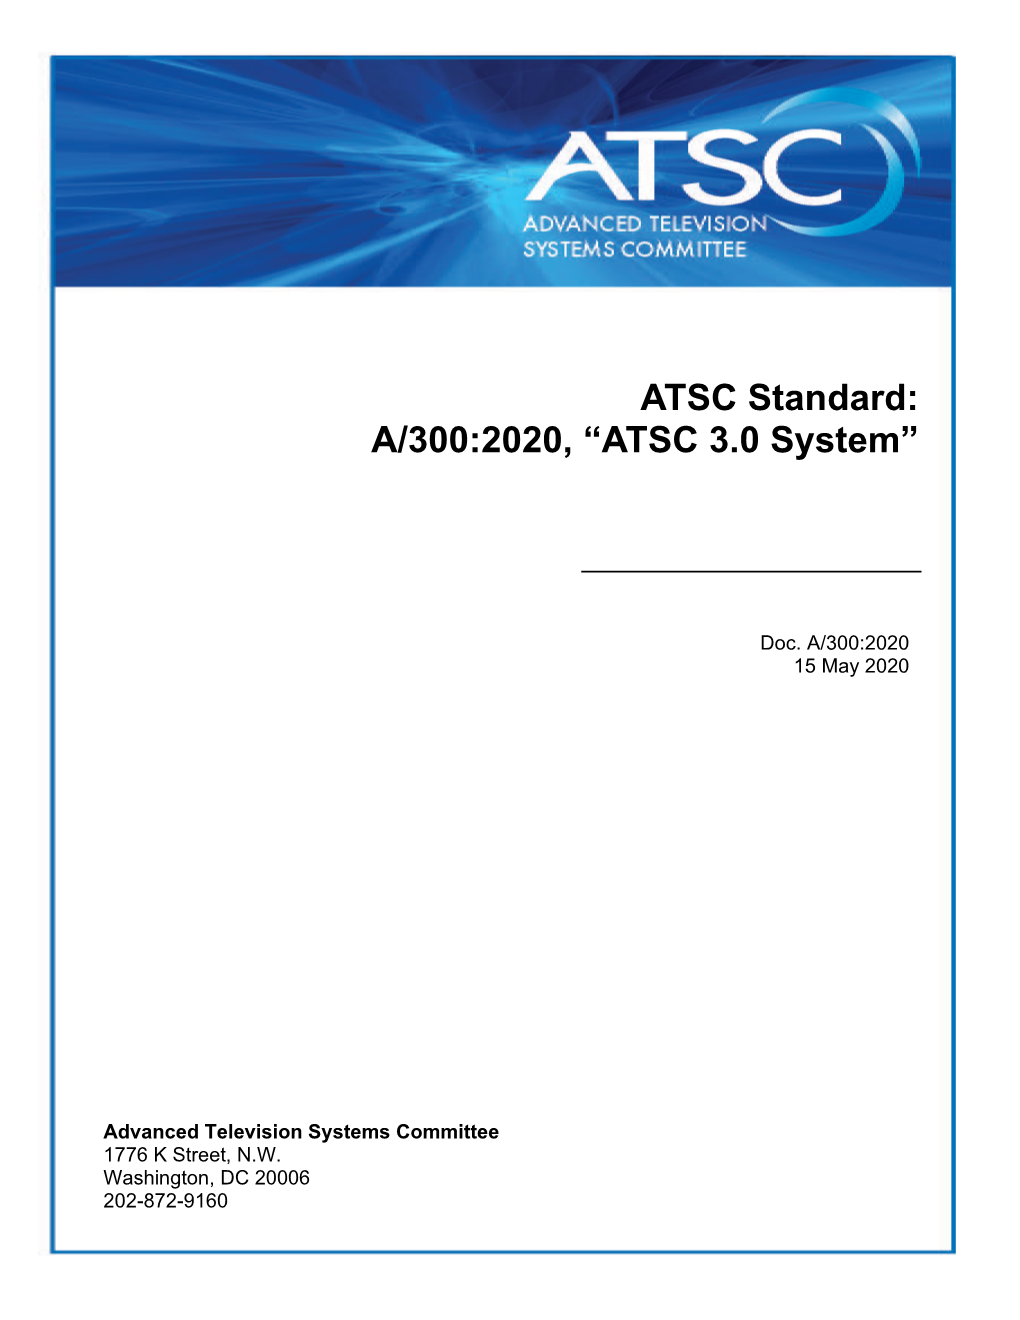 A/300, "ATSC 3.0 System Standard"